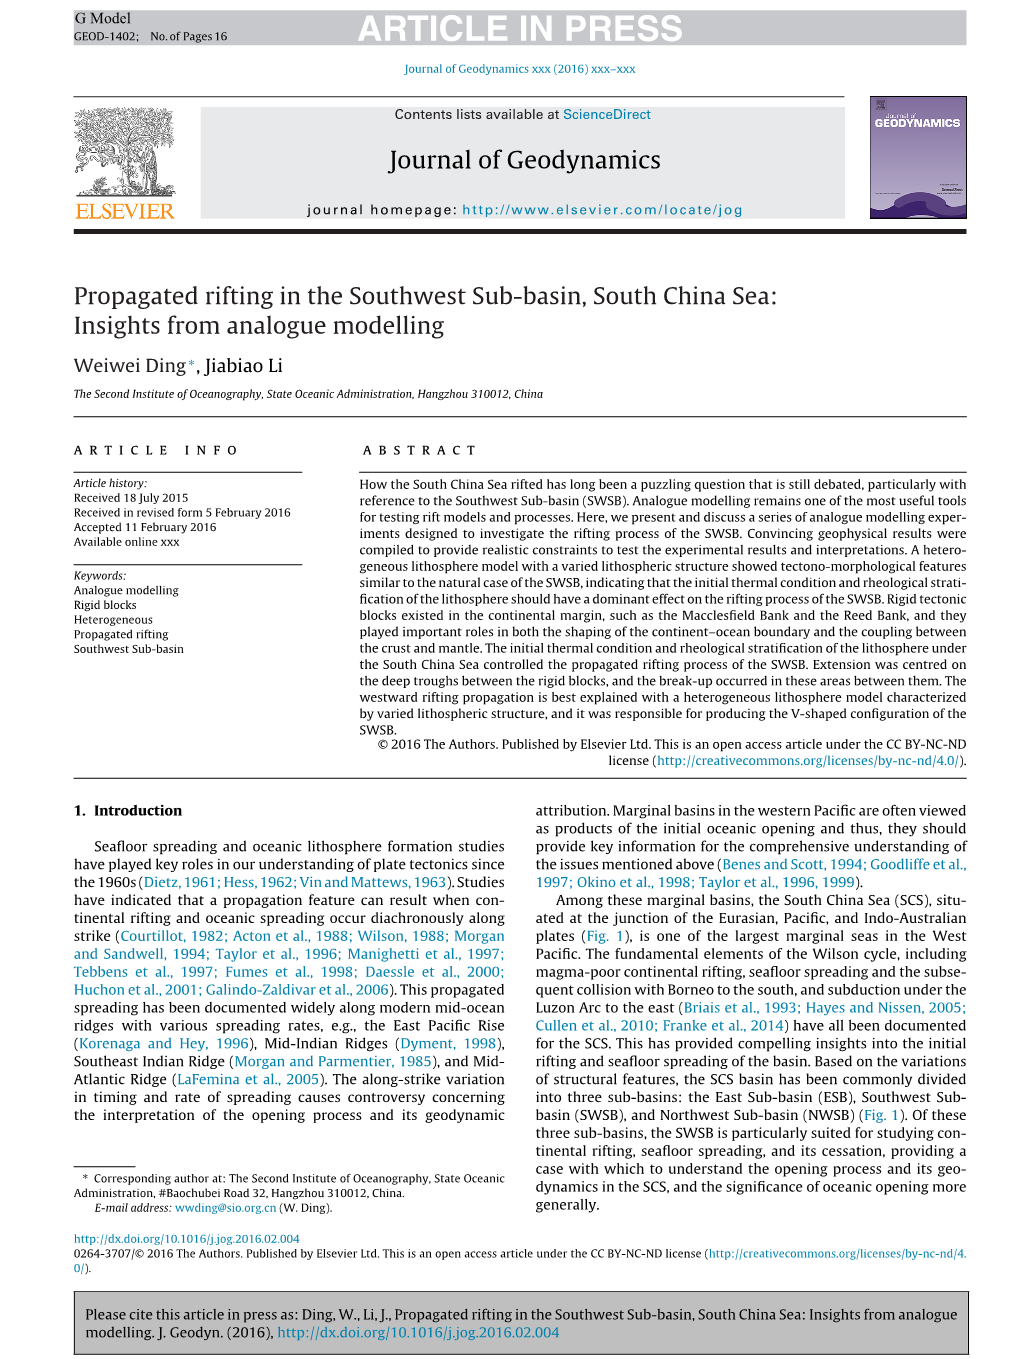 Propagated Rifting in the Southwest Sub-Basin, South China Sea